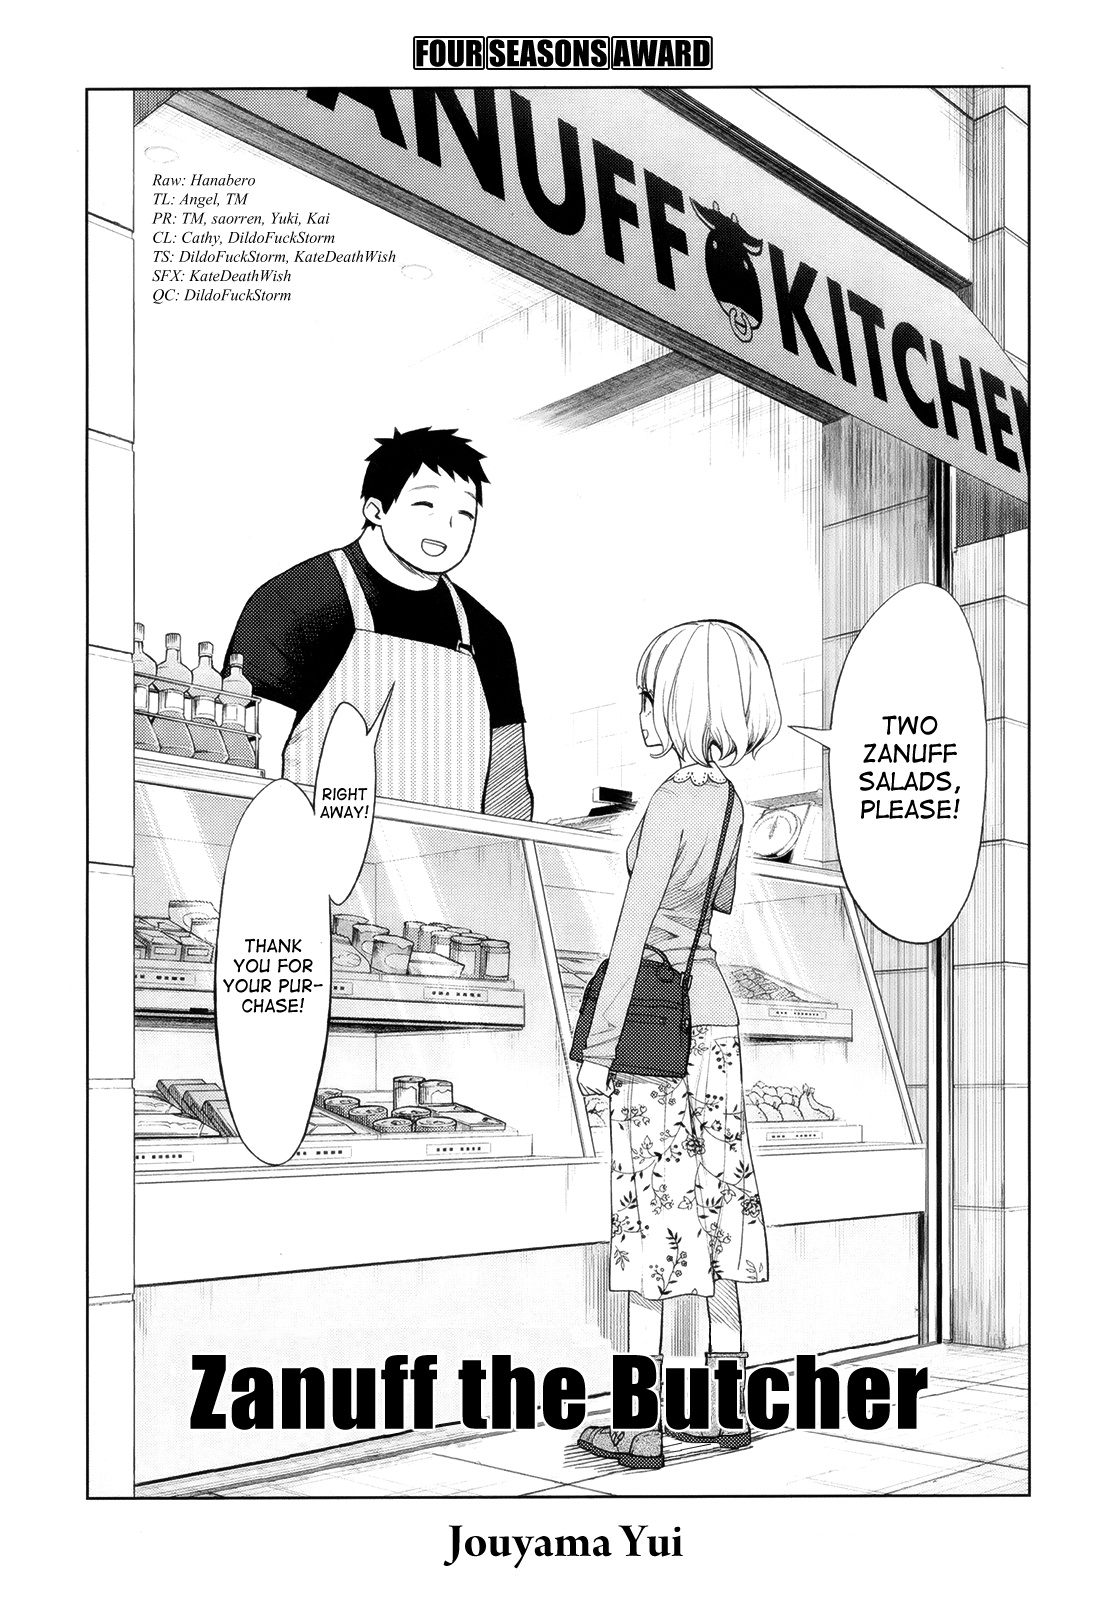 Zanuff the butcher manga